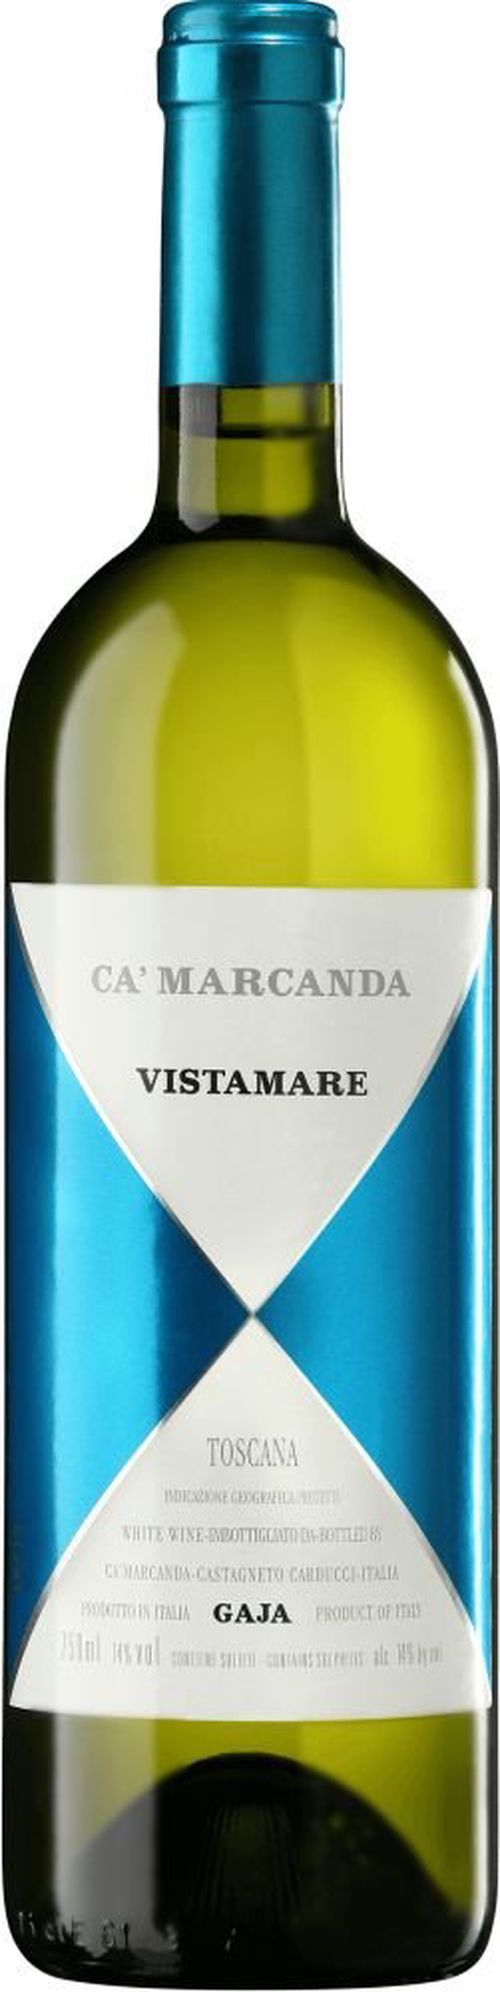 Gaja Ca'Marcanda Vistamare Toscana 0,75l 13,5%